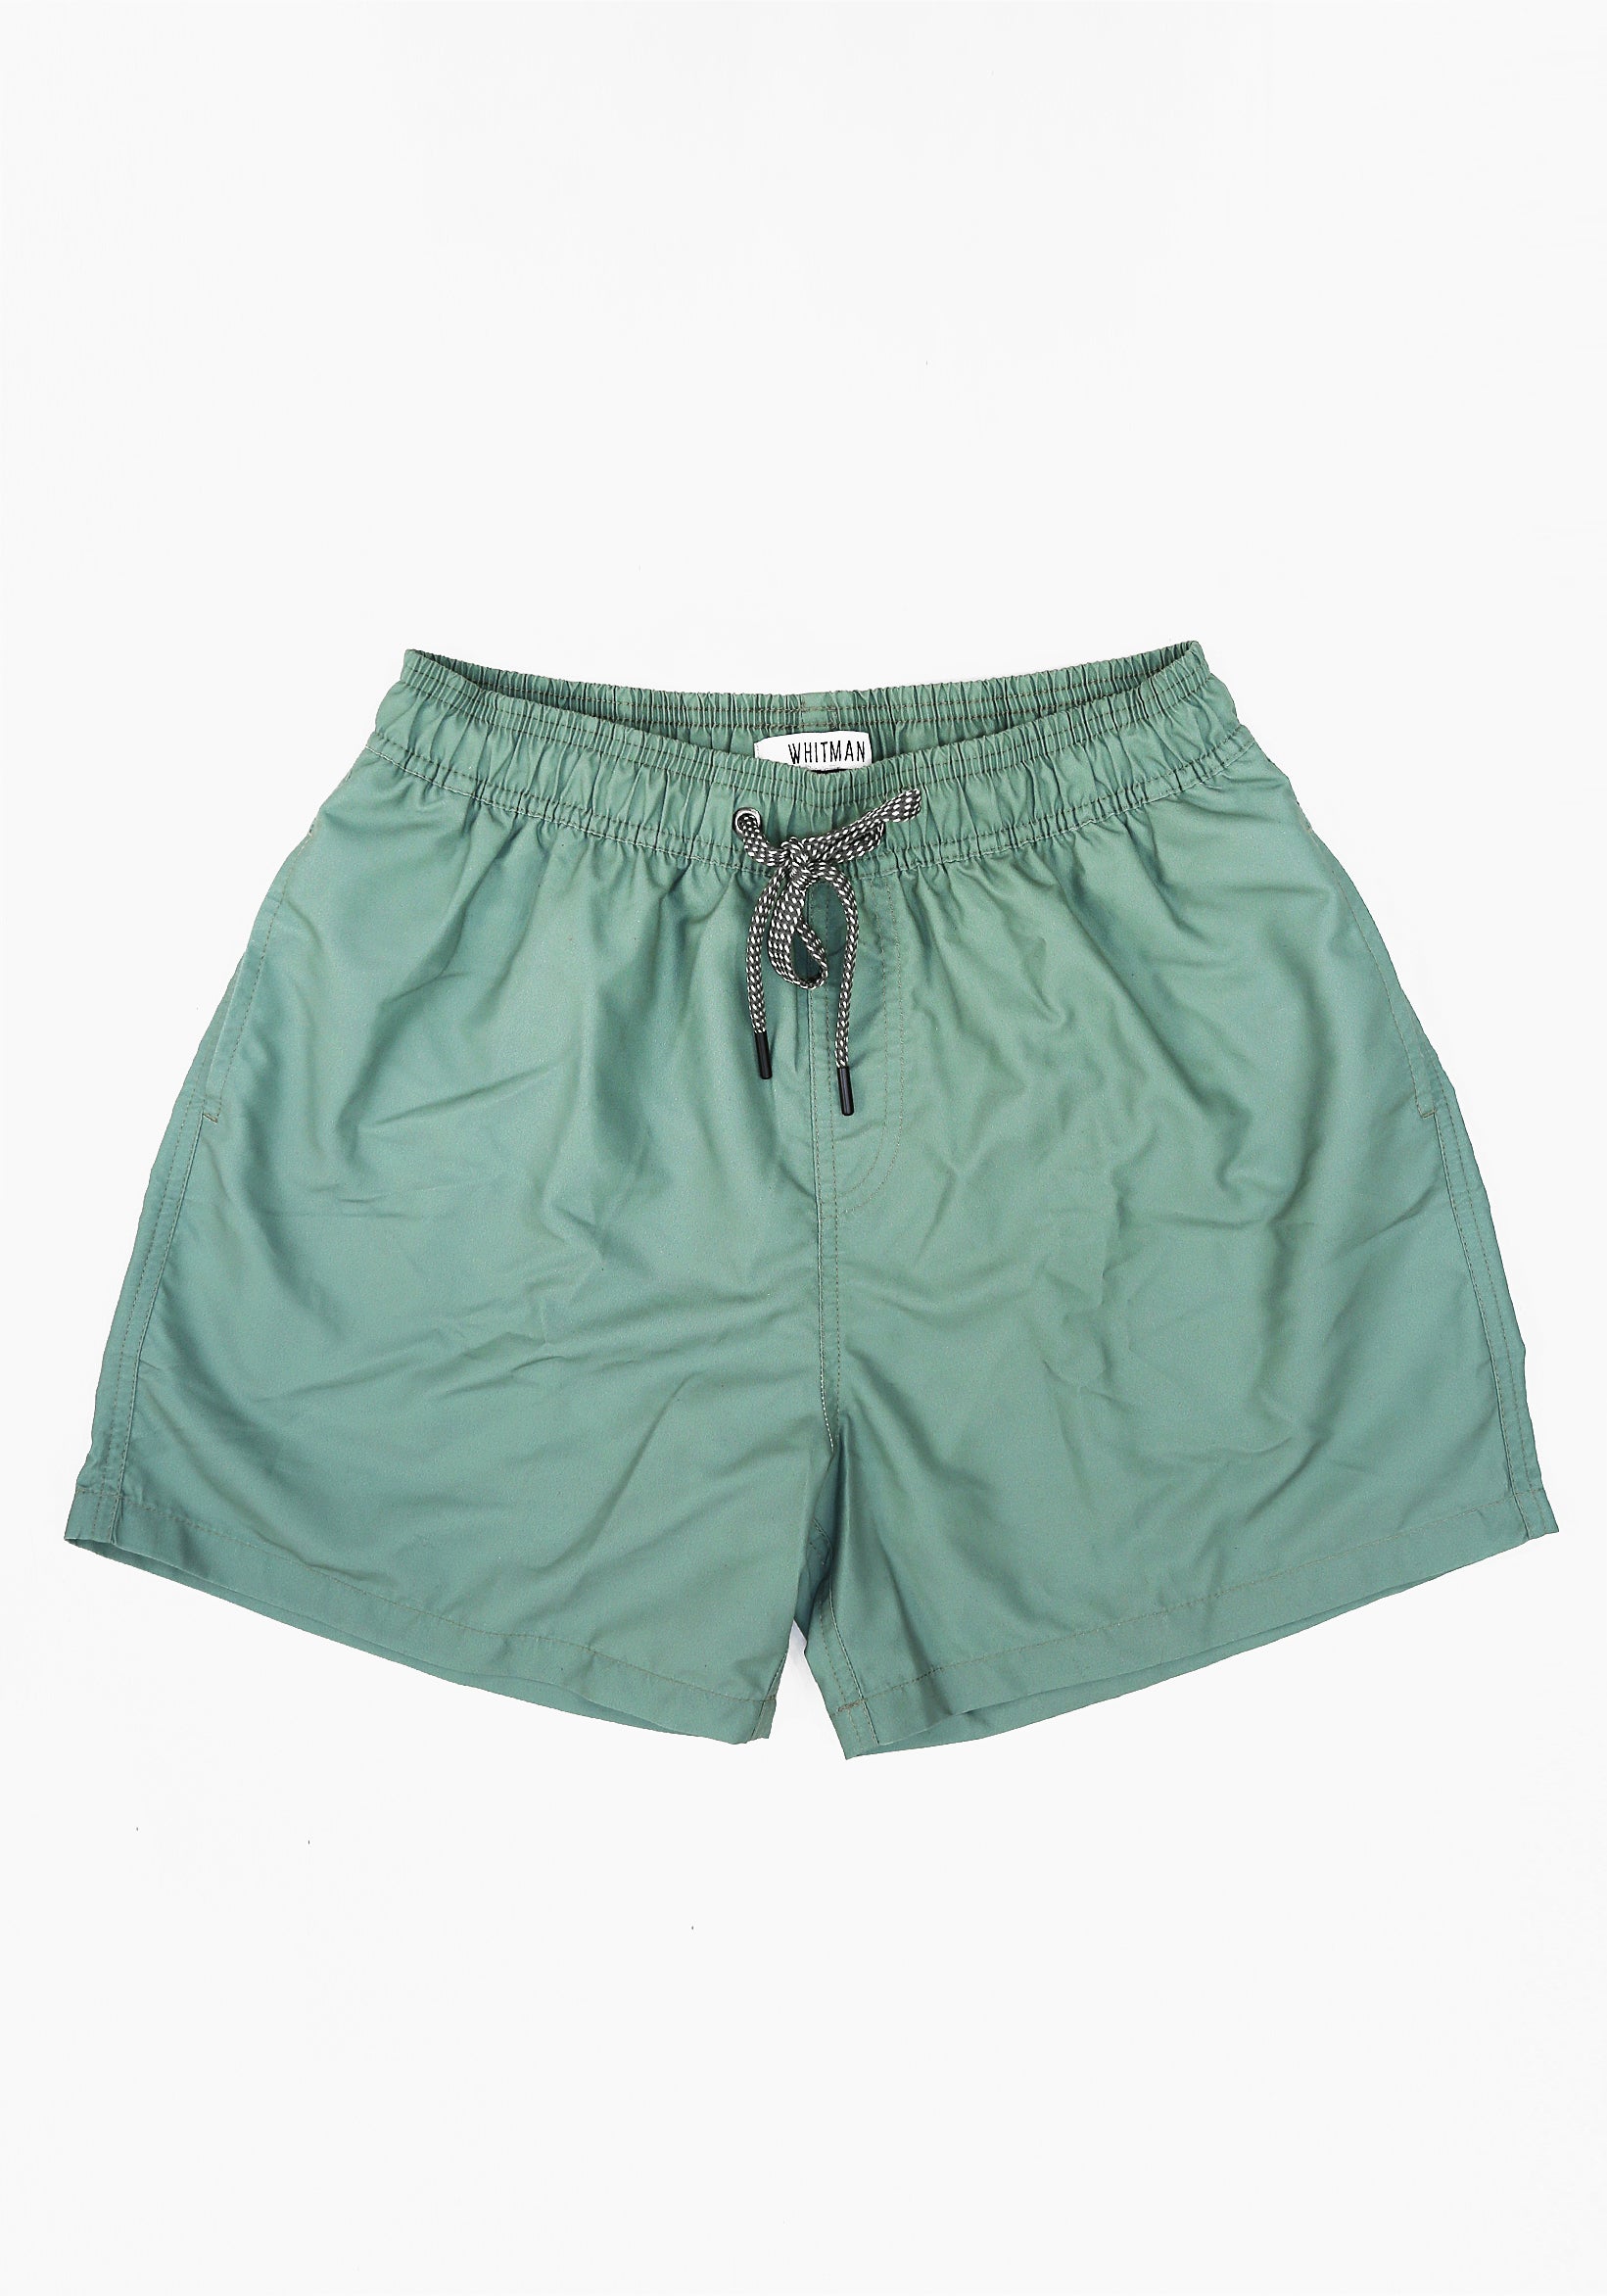 Budapest Green Shorts